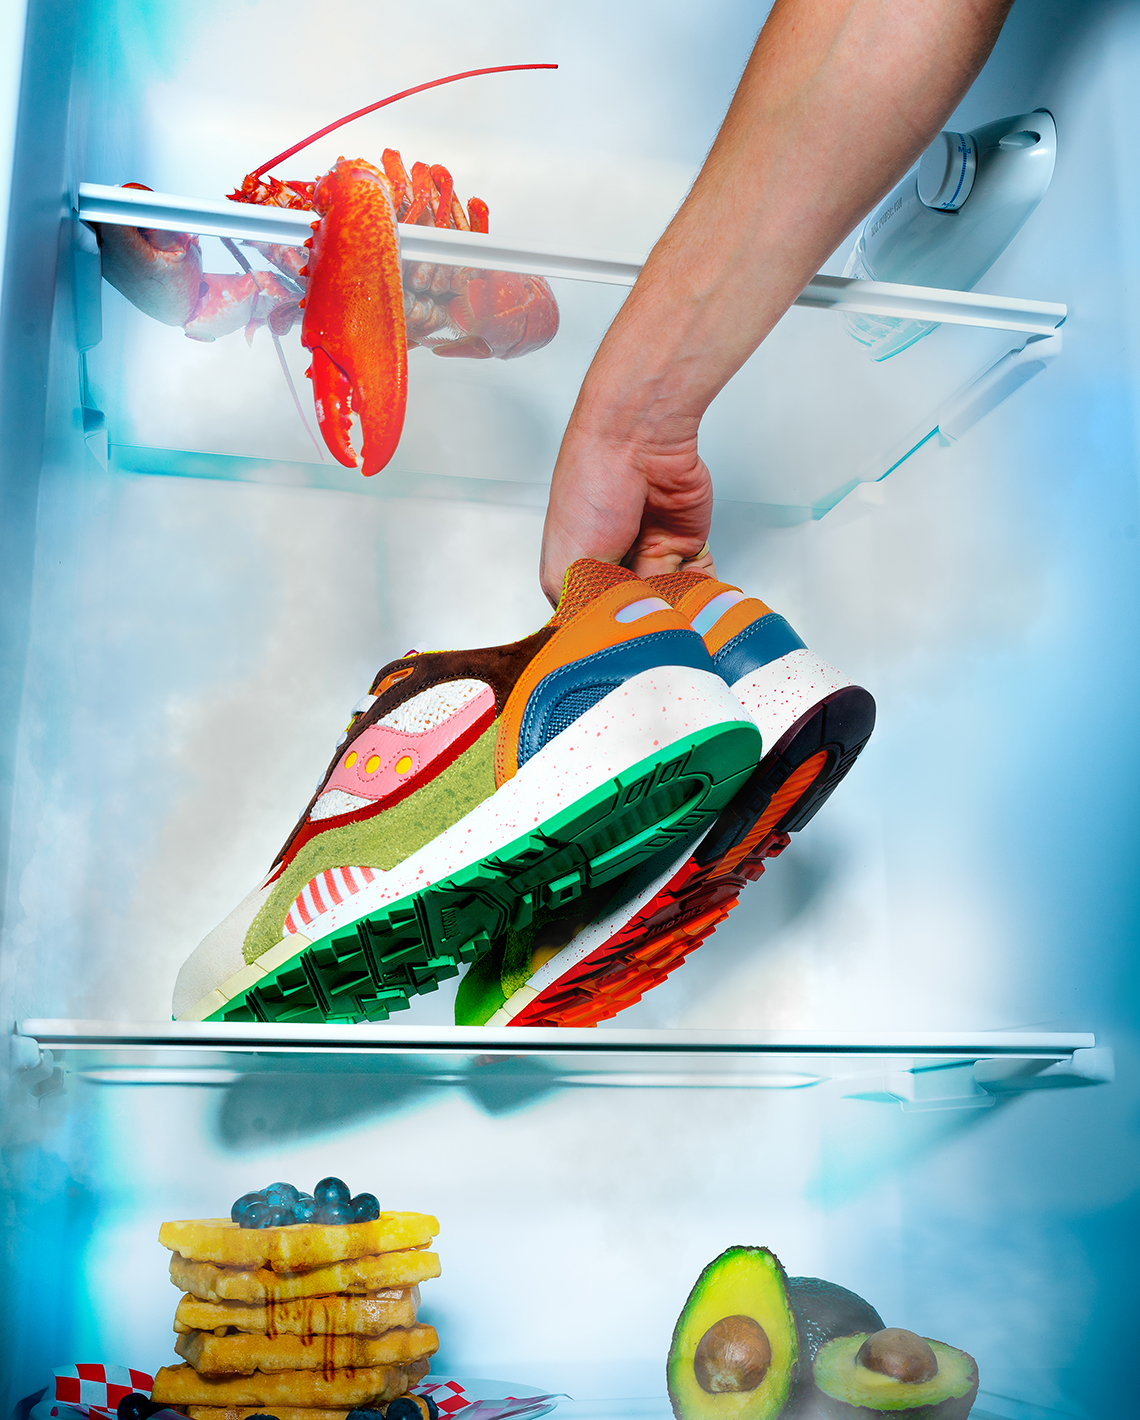 Avocado Toast-Themed Saucony Originals Shoe Foodfight S70595 1 Release Date 7